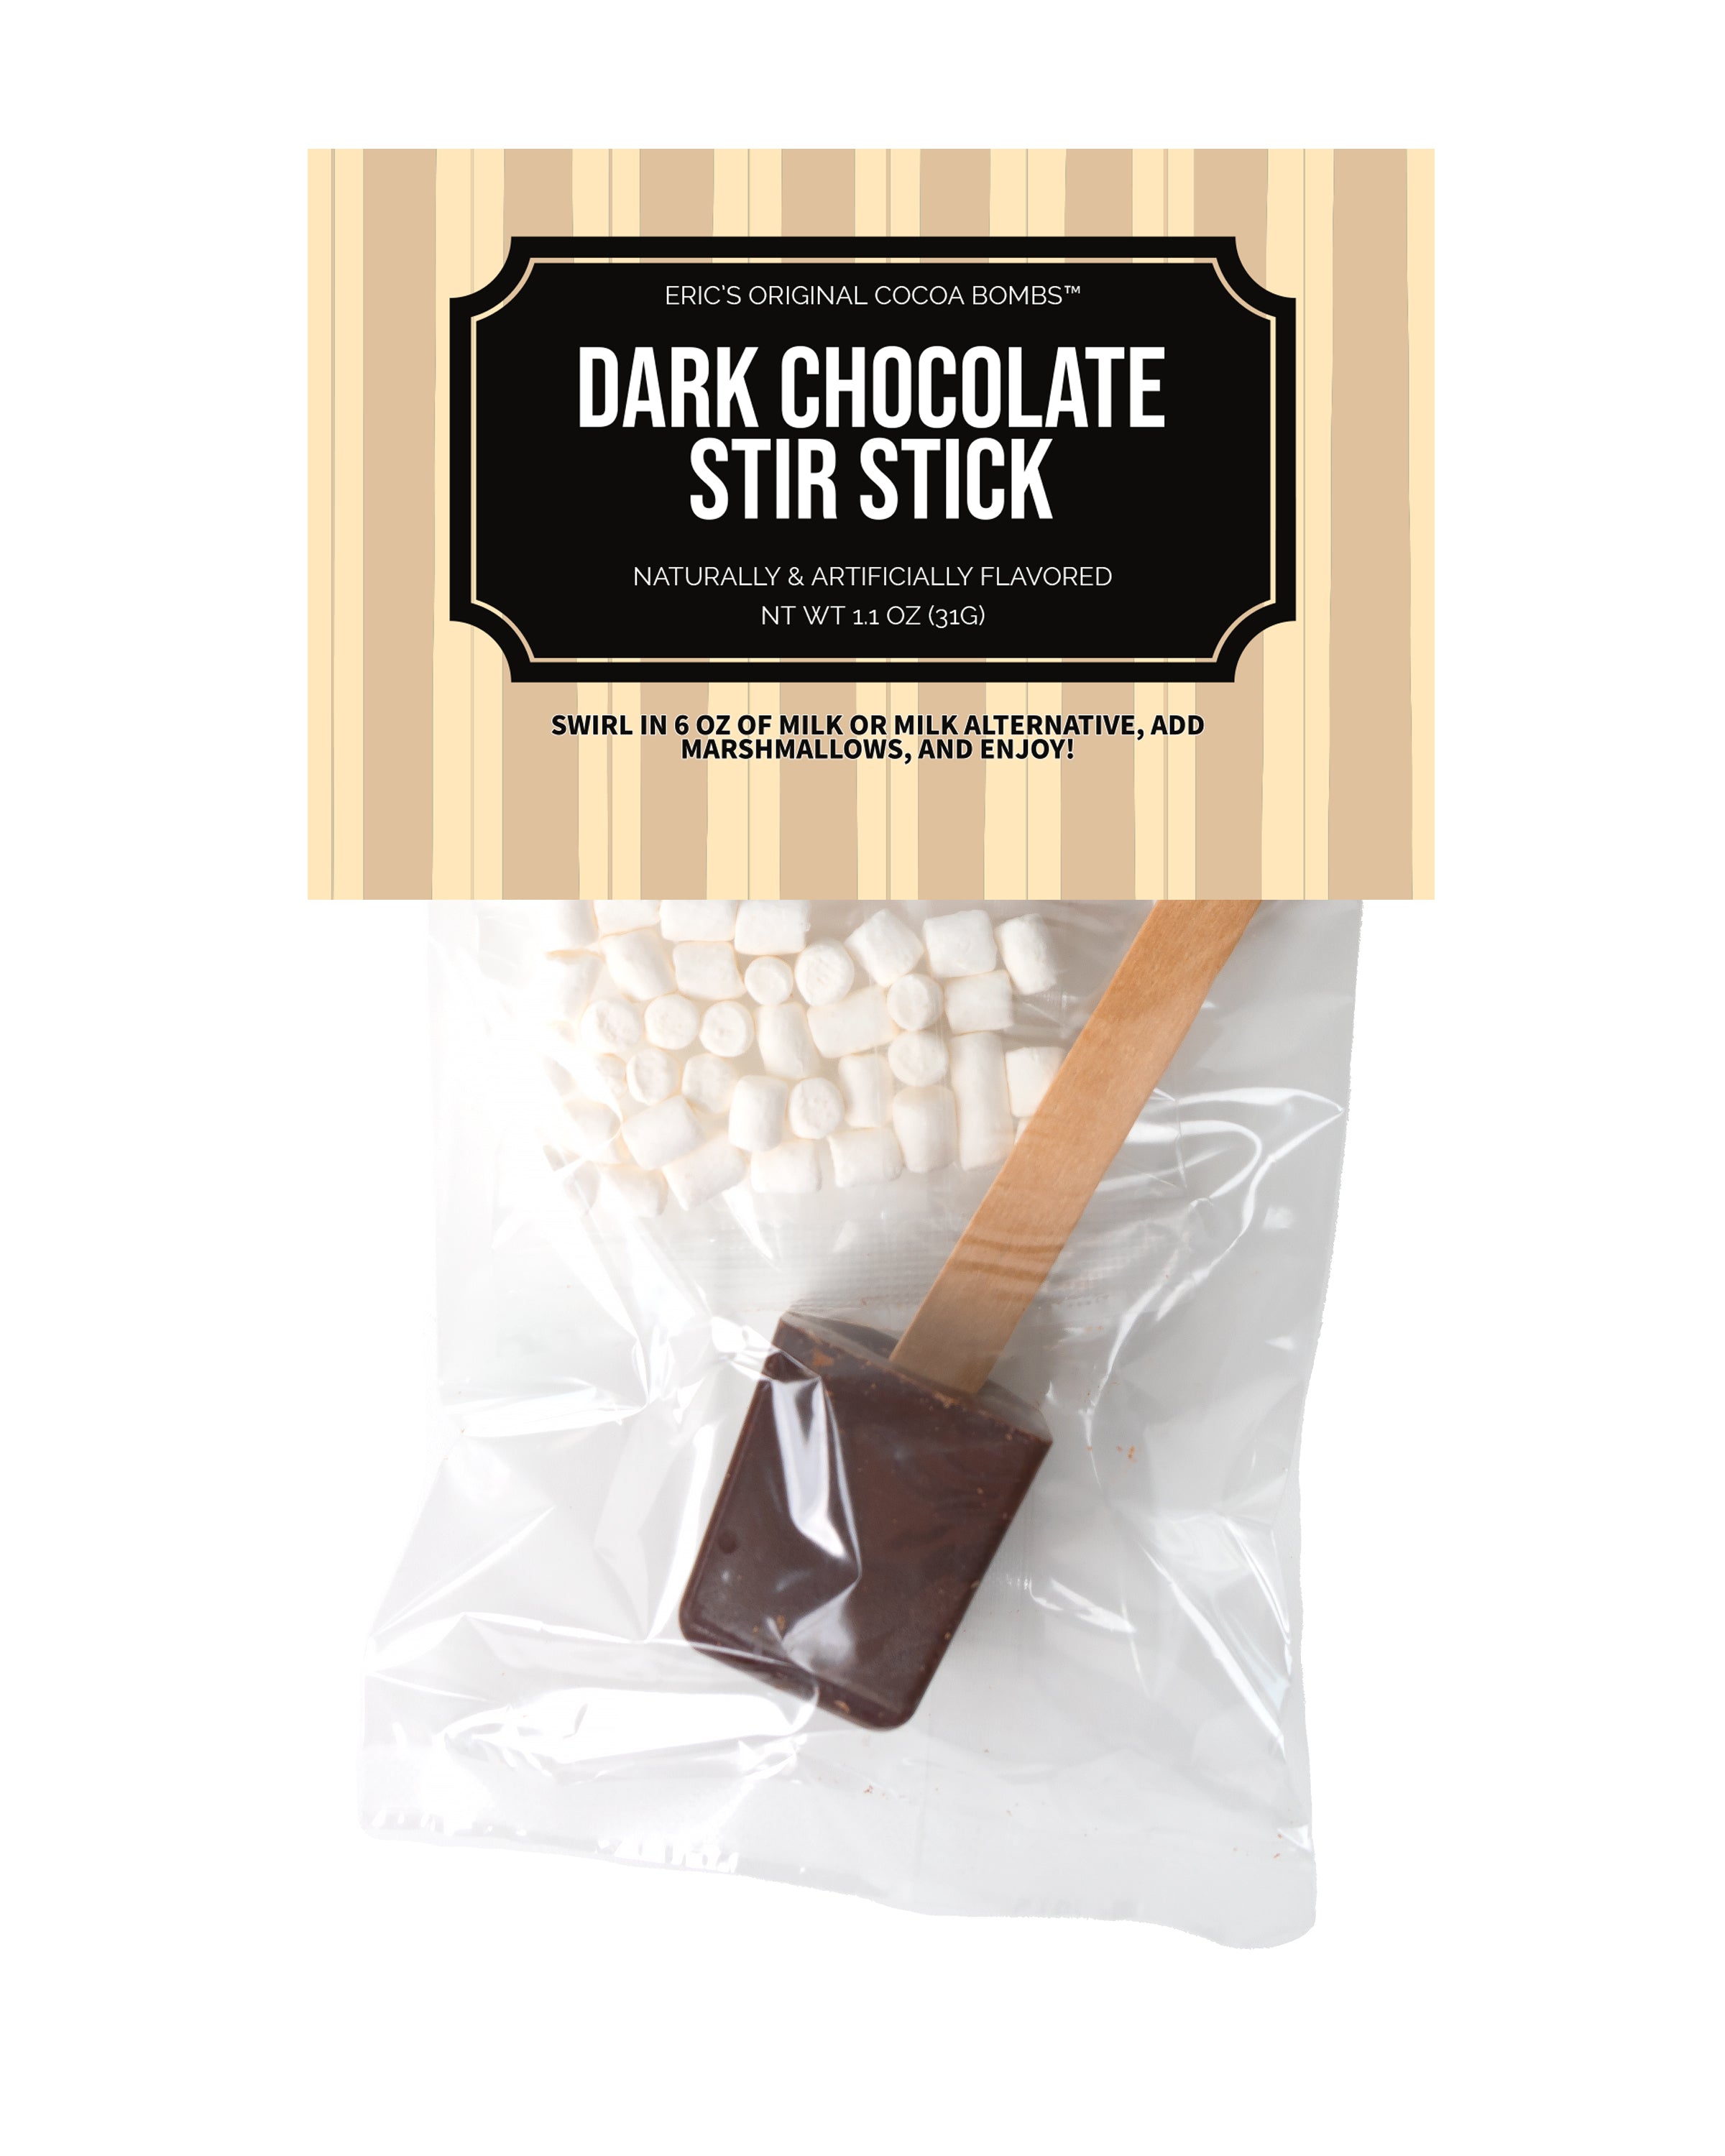 Hot Chocolate Stir Sticks - Chocolate & Mini Marshmallows